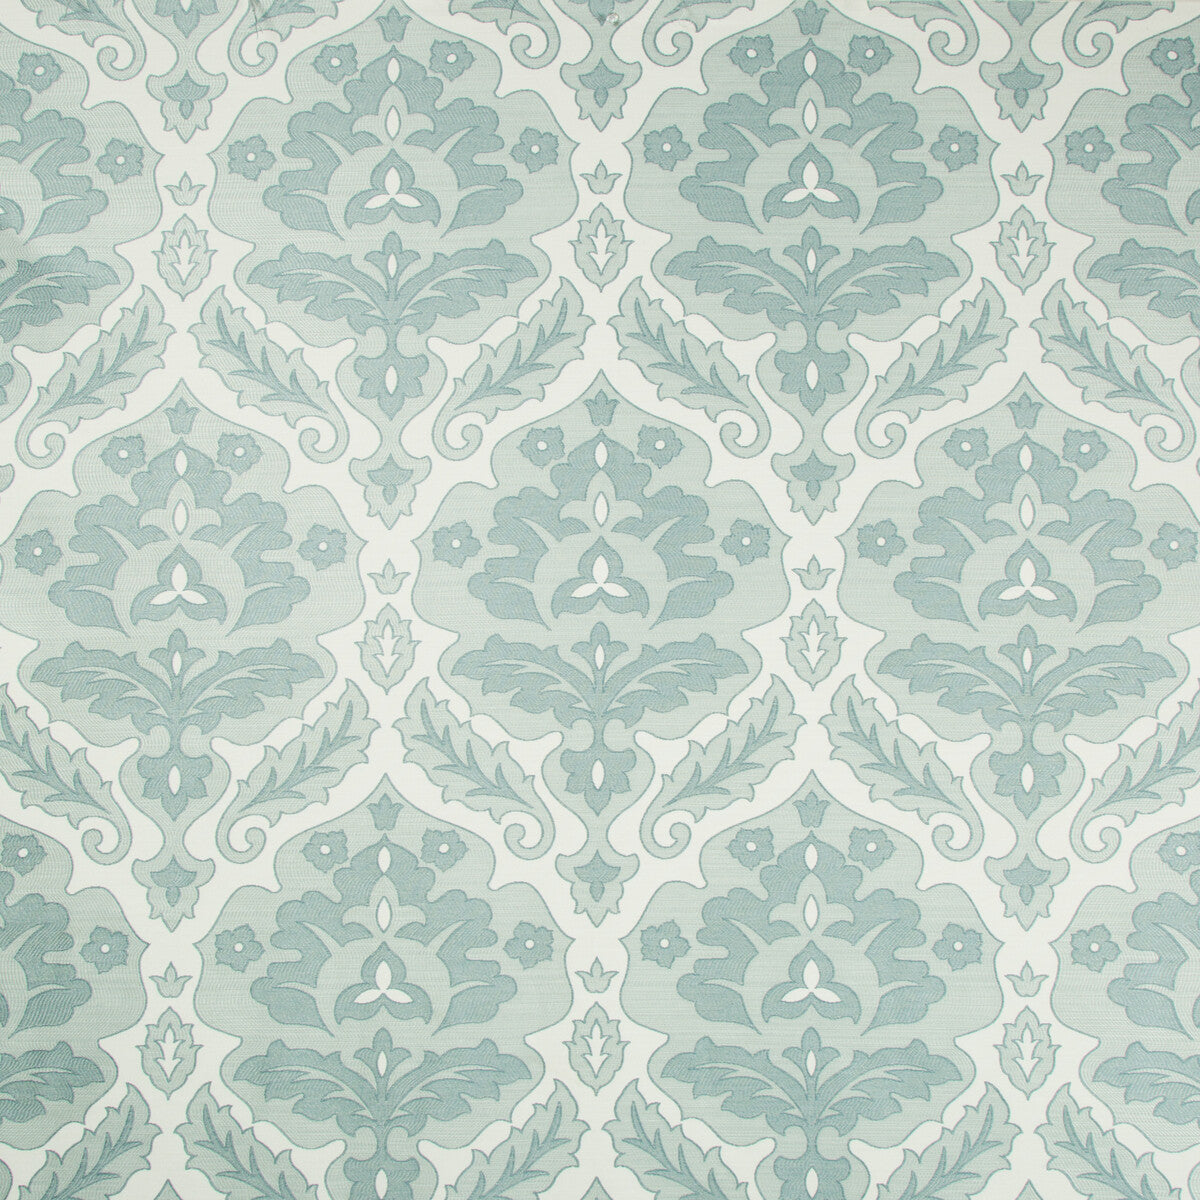 Kravet Design fabric in 34719-15 color - pattern 34719.15.0 - by Kravet Design in the Gis collection